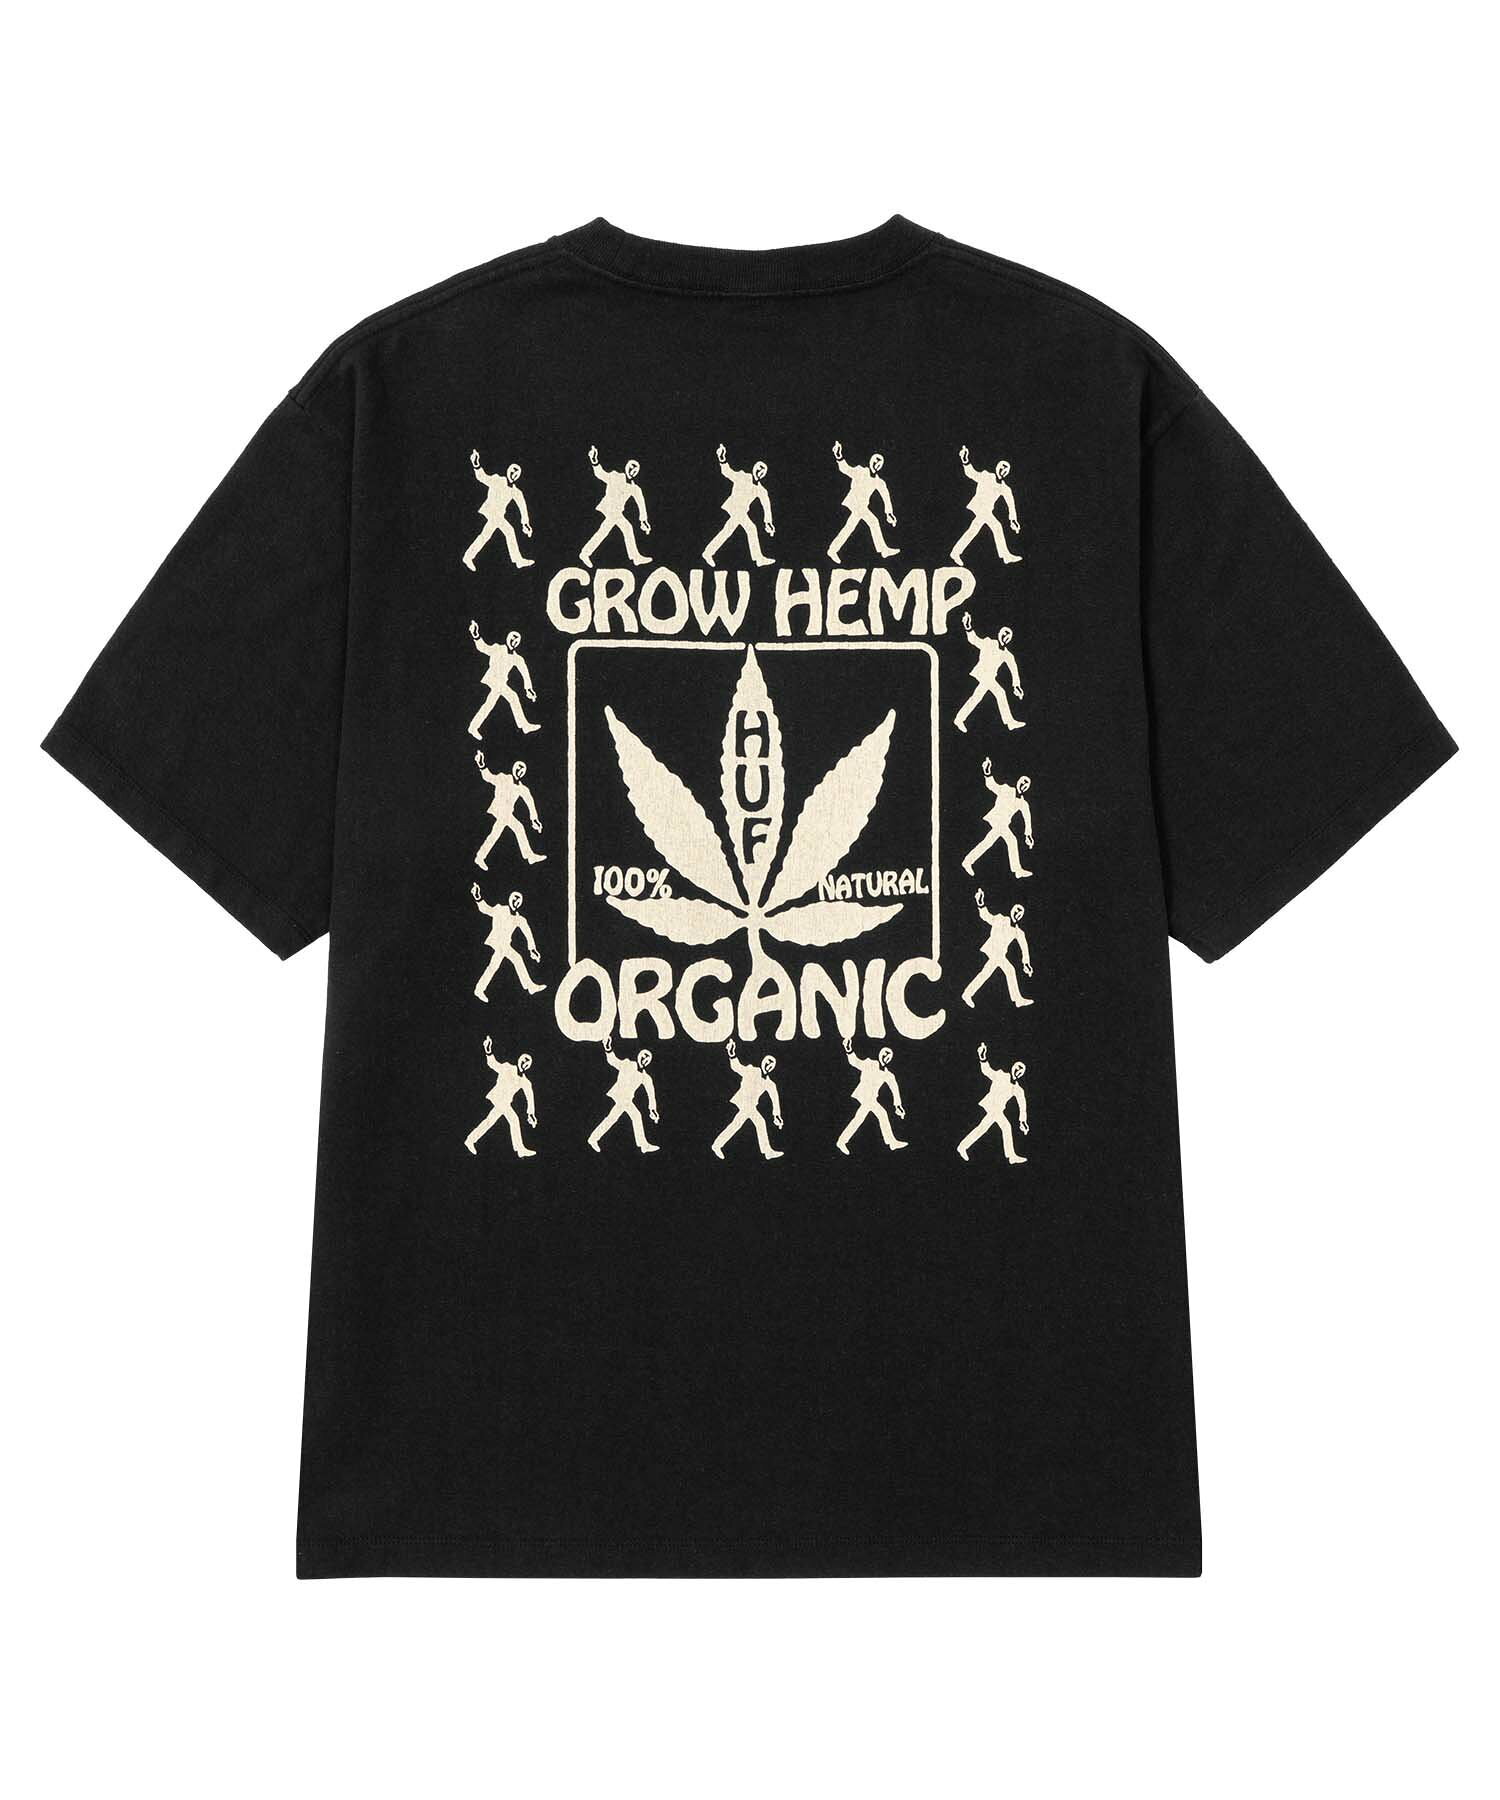 ORGANIC GROW HEMP S/S TEE HUF ハフ Tシャツ